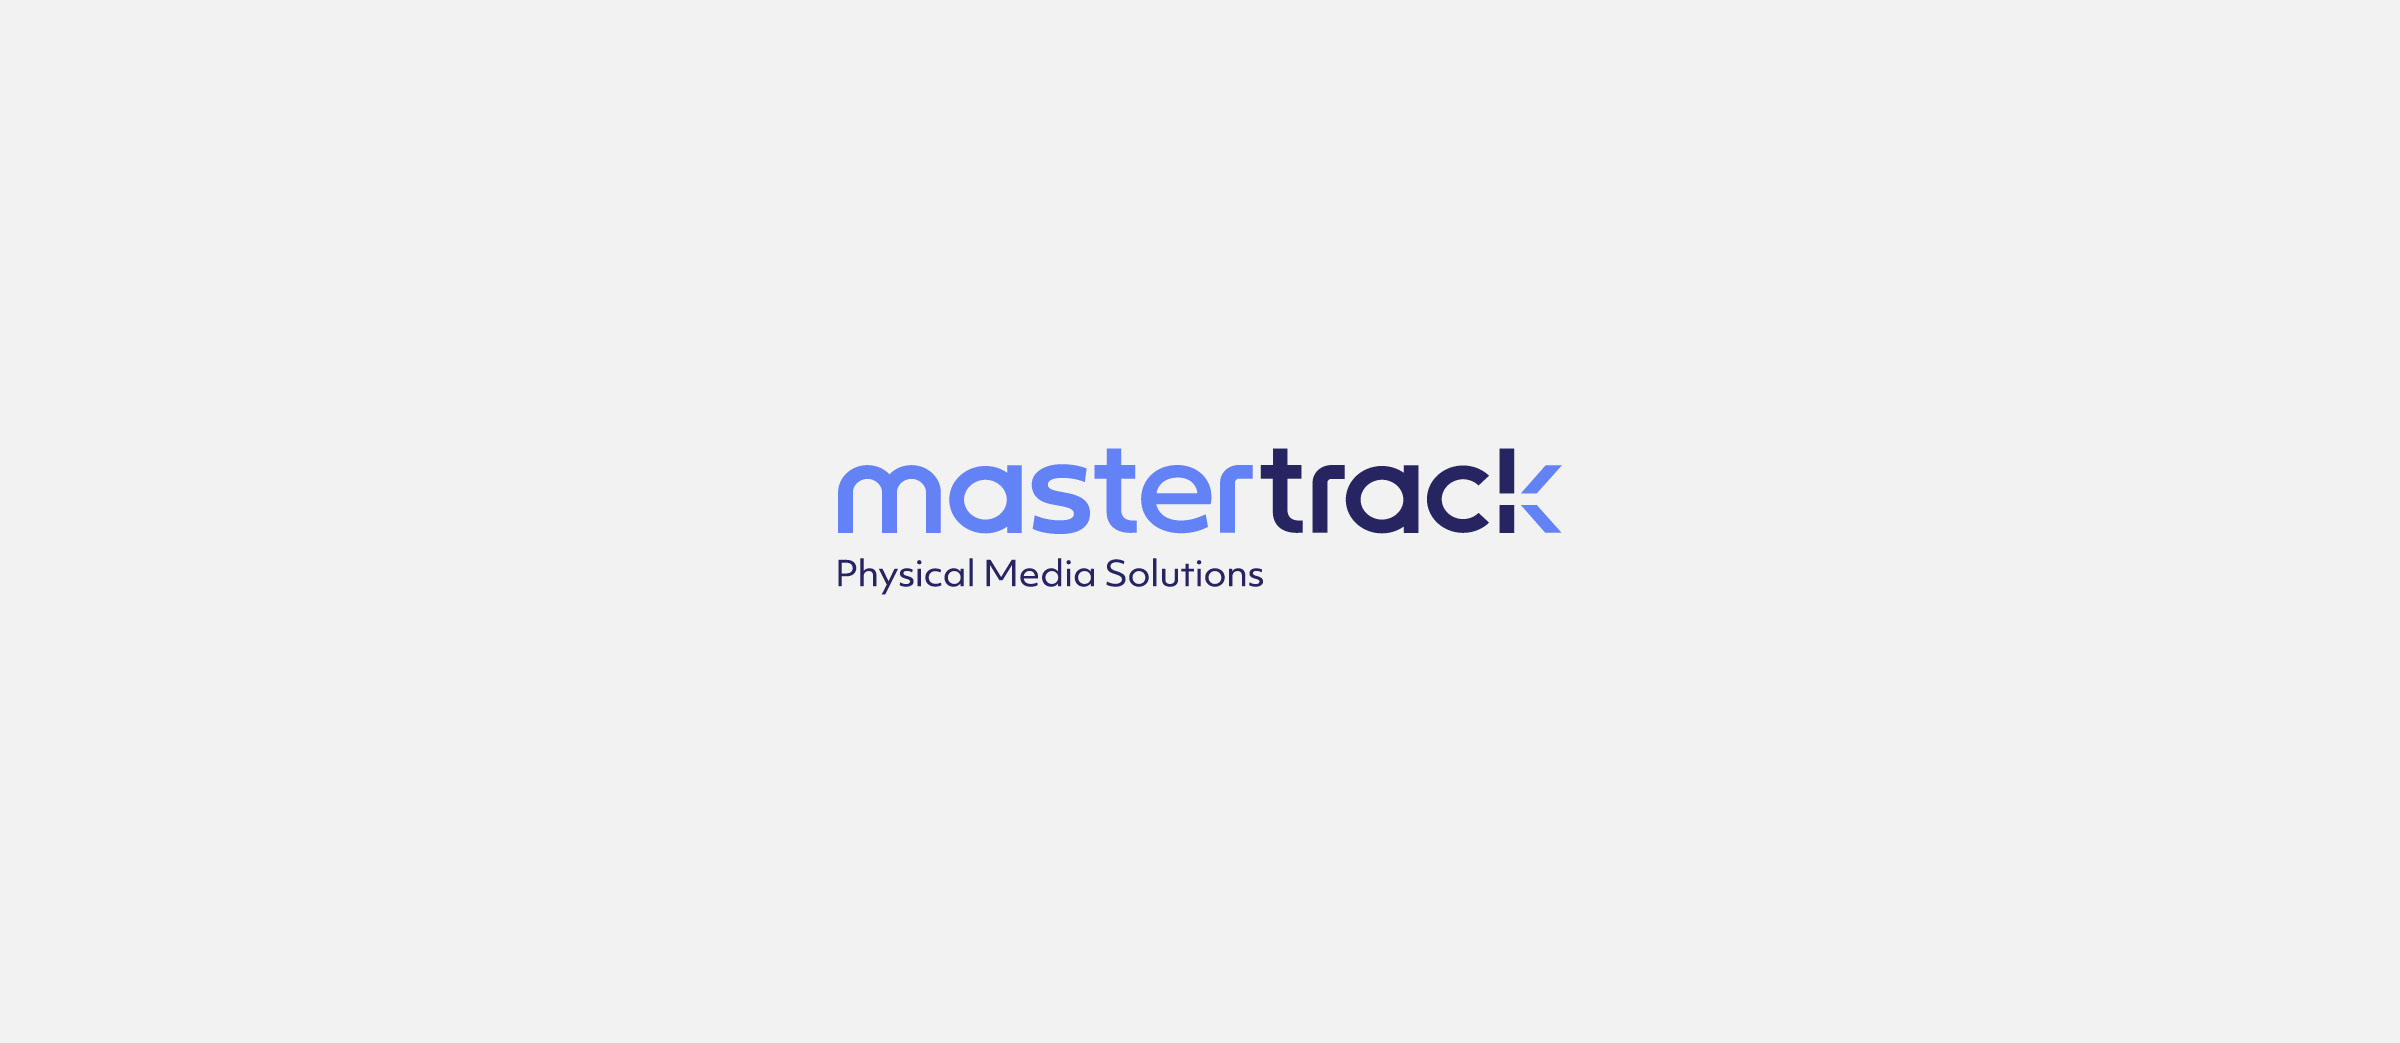 Mastertrack Branding Example Image